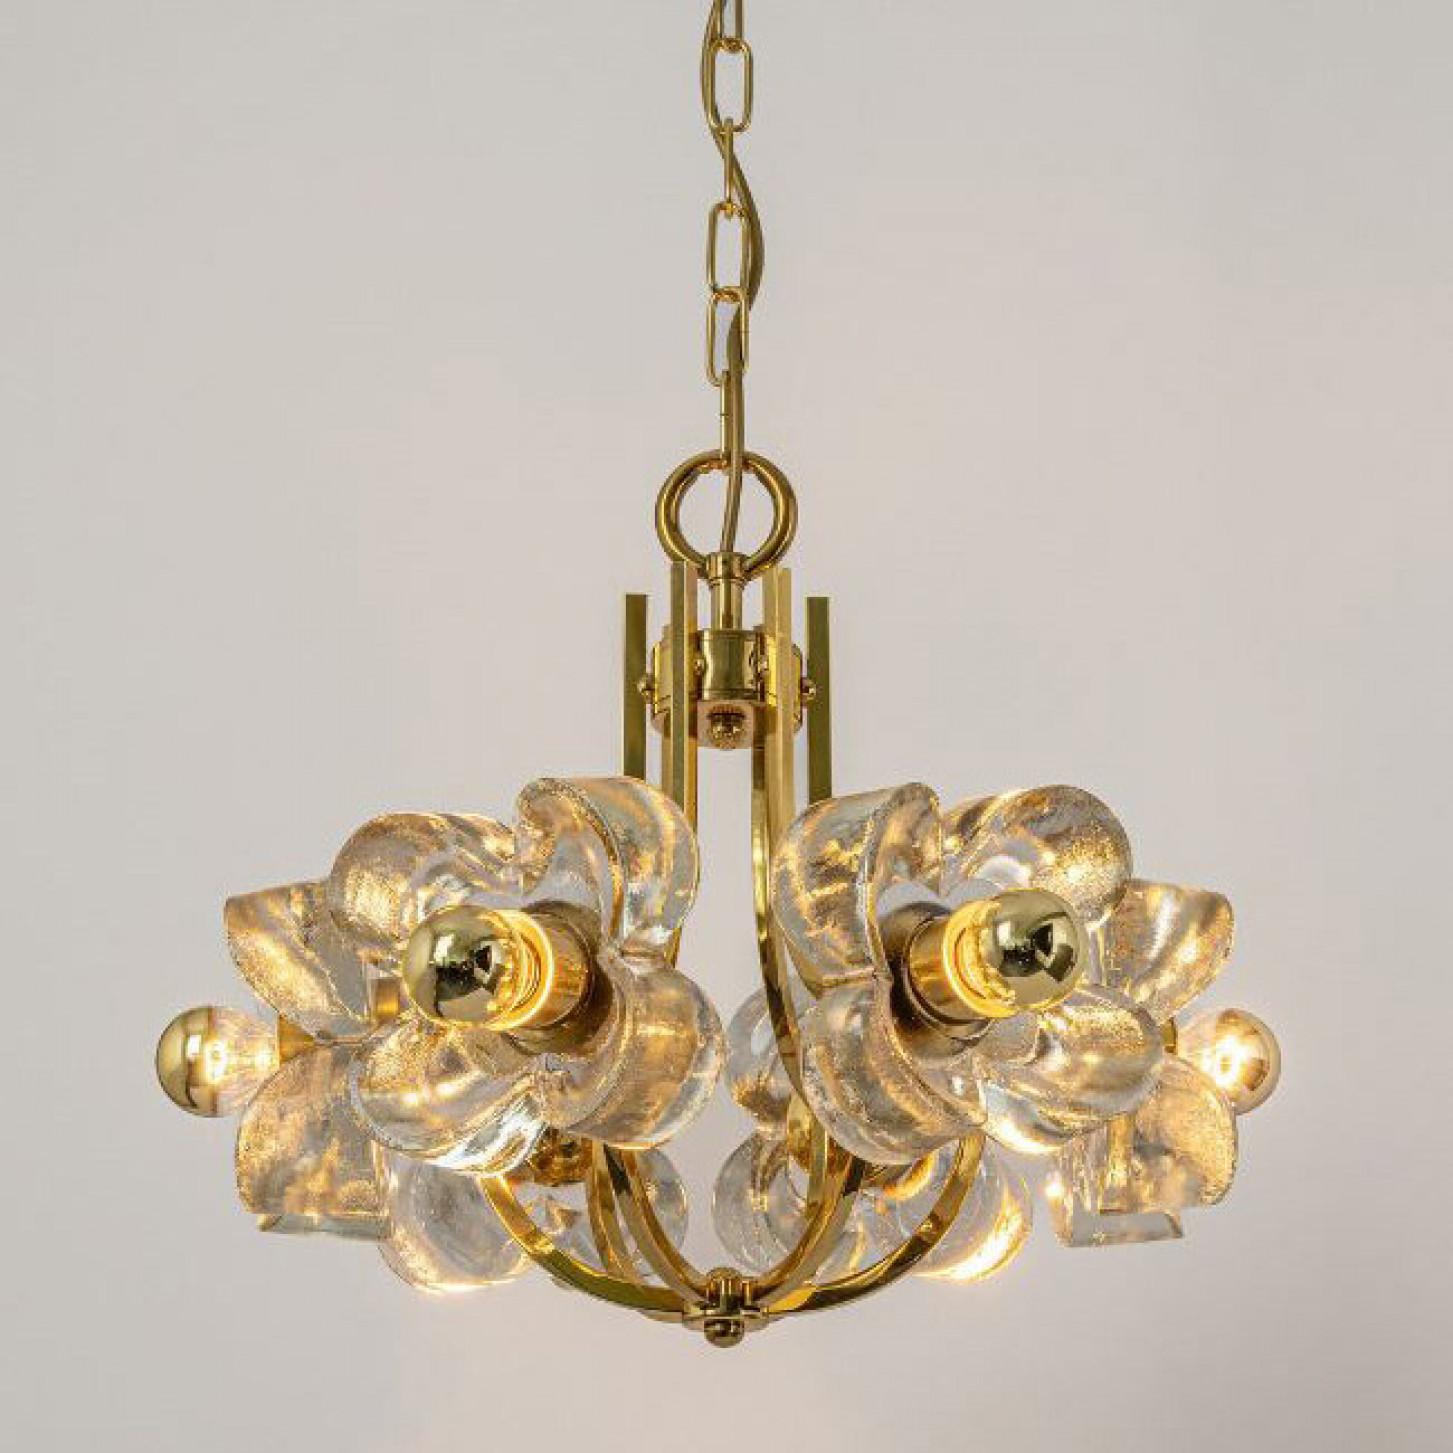 1 of 2 Sische Glass and Brass Chandelier, 1960s Modernist Design, Kalmar Style In Good Condition For Sale In Rijssen, NL